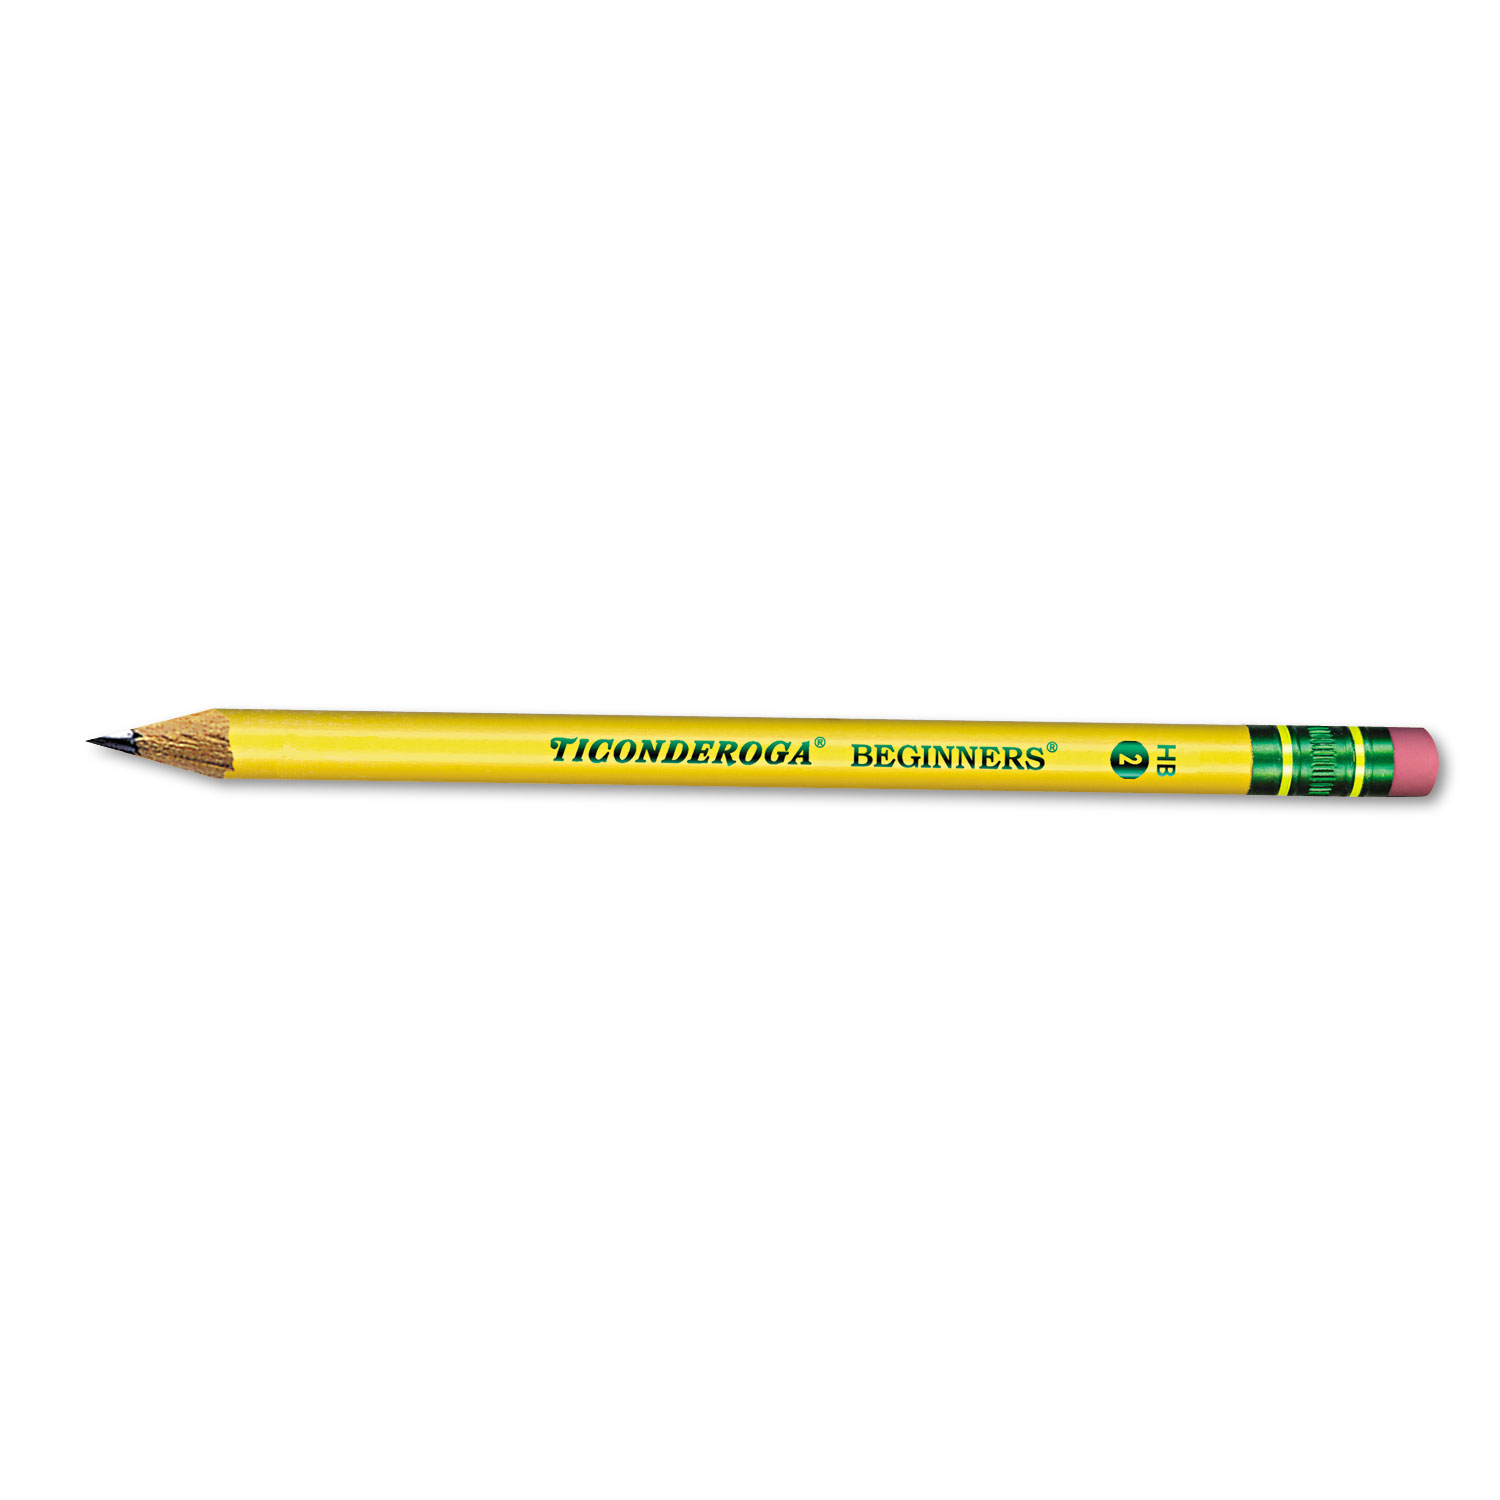  Dixon 13308 Ticonderoga Beginners Woodcase Pencil with Eraser and Microban Protection, HB (#2), Black Lead, Yellow Barrel, Dozen (DIX13308) 